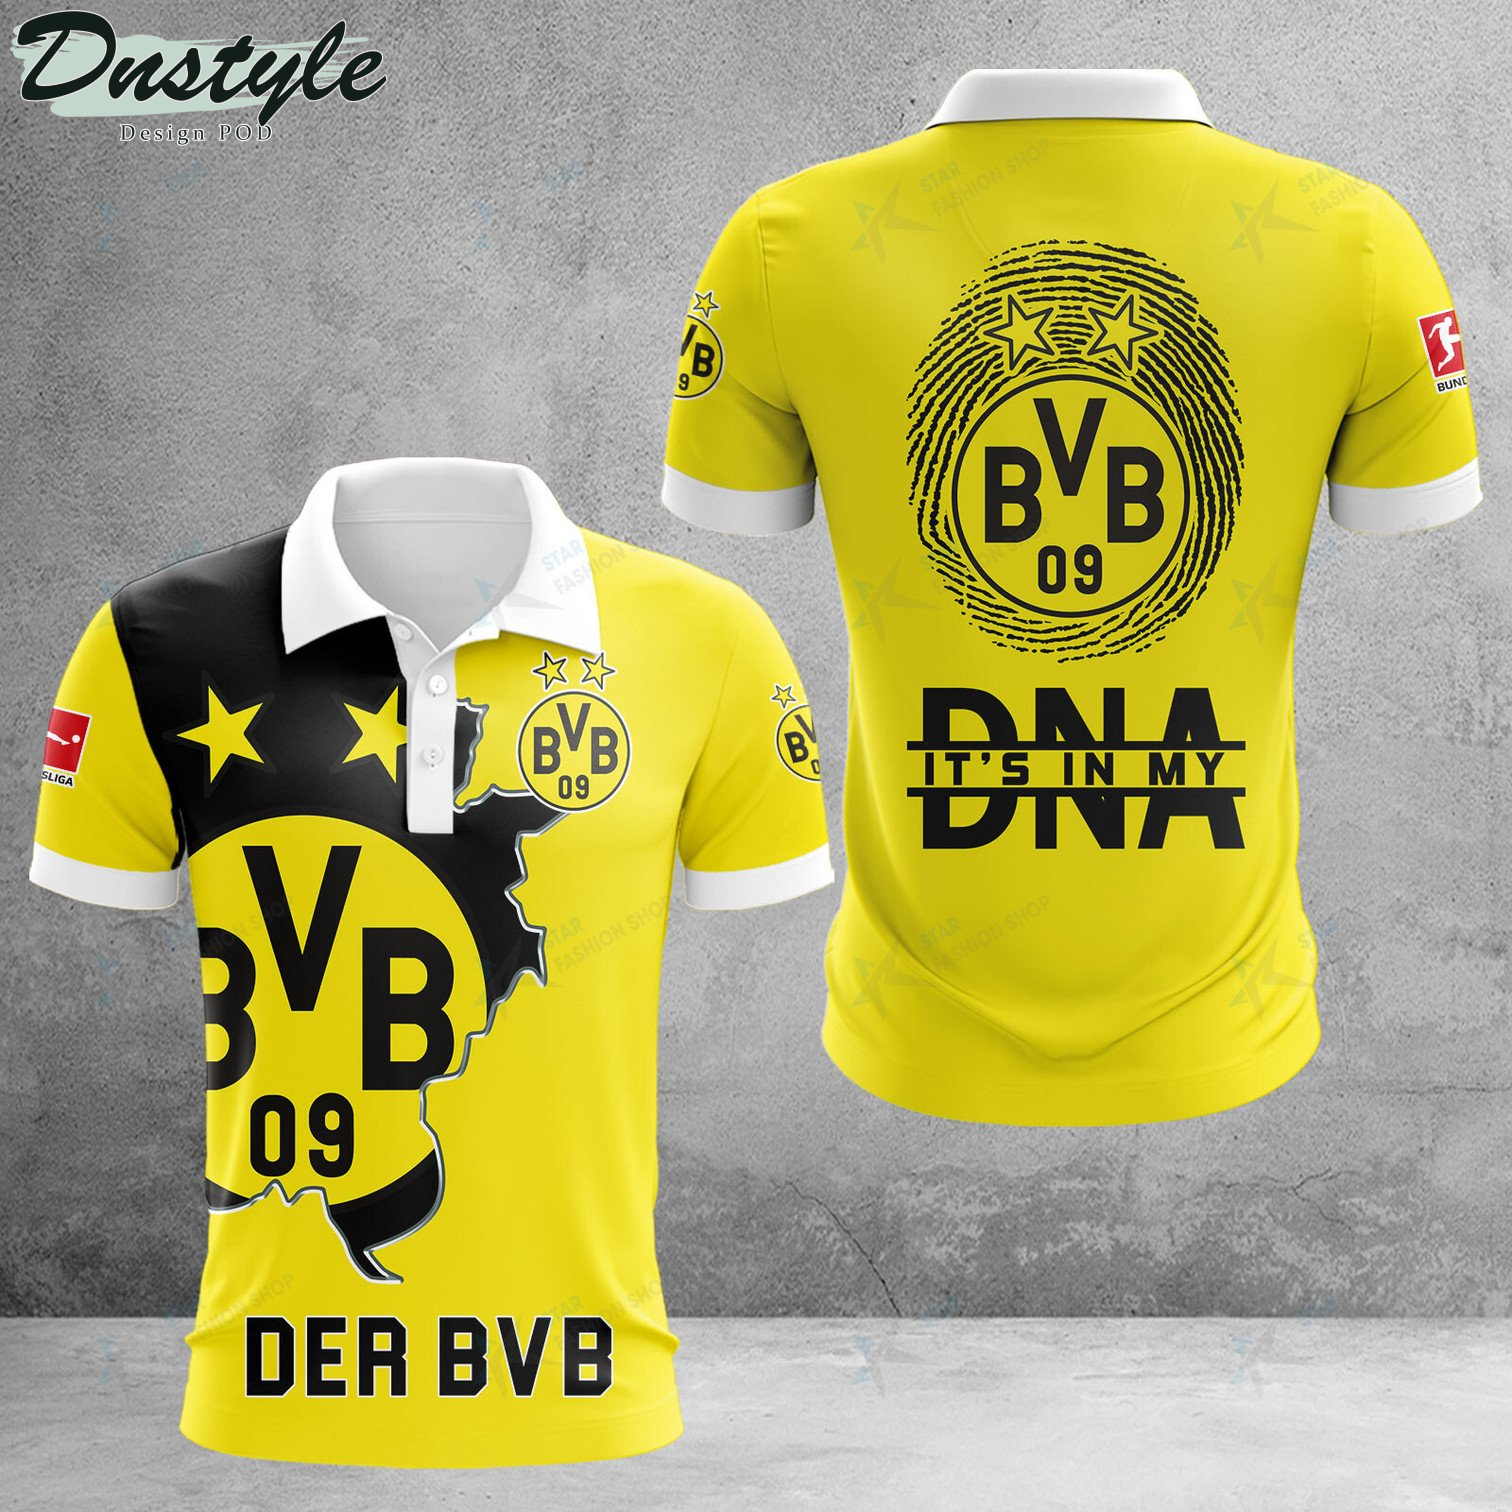 Borussia Dortmund it's in my DNA polo shirt